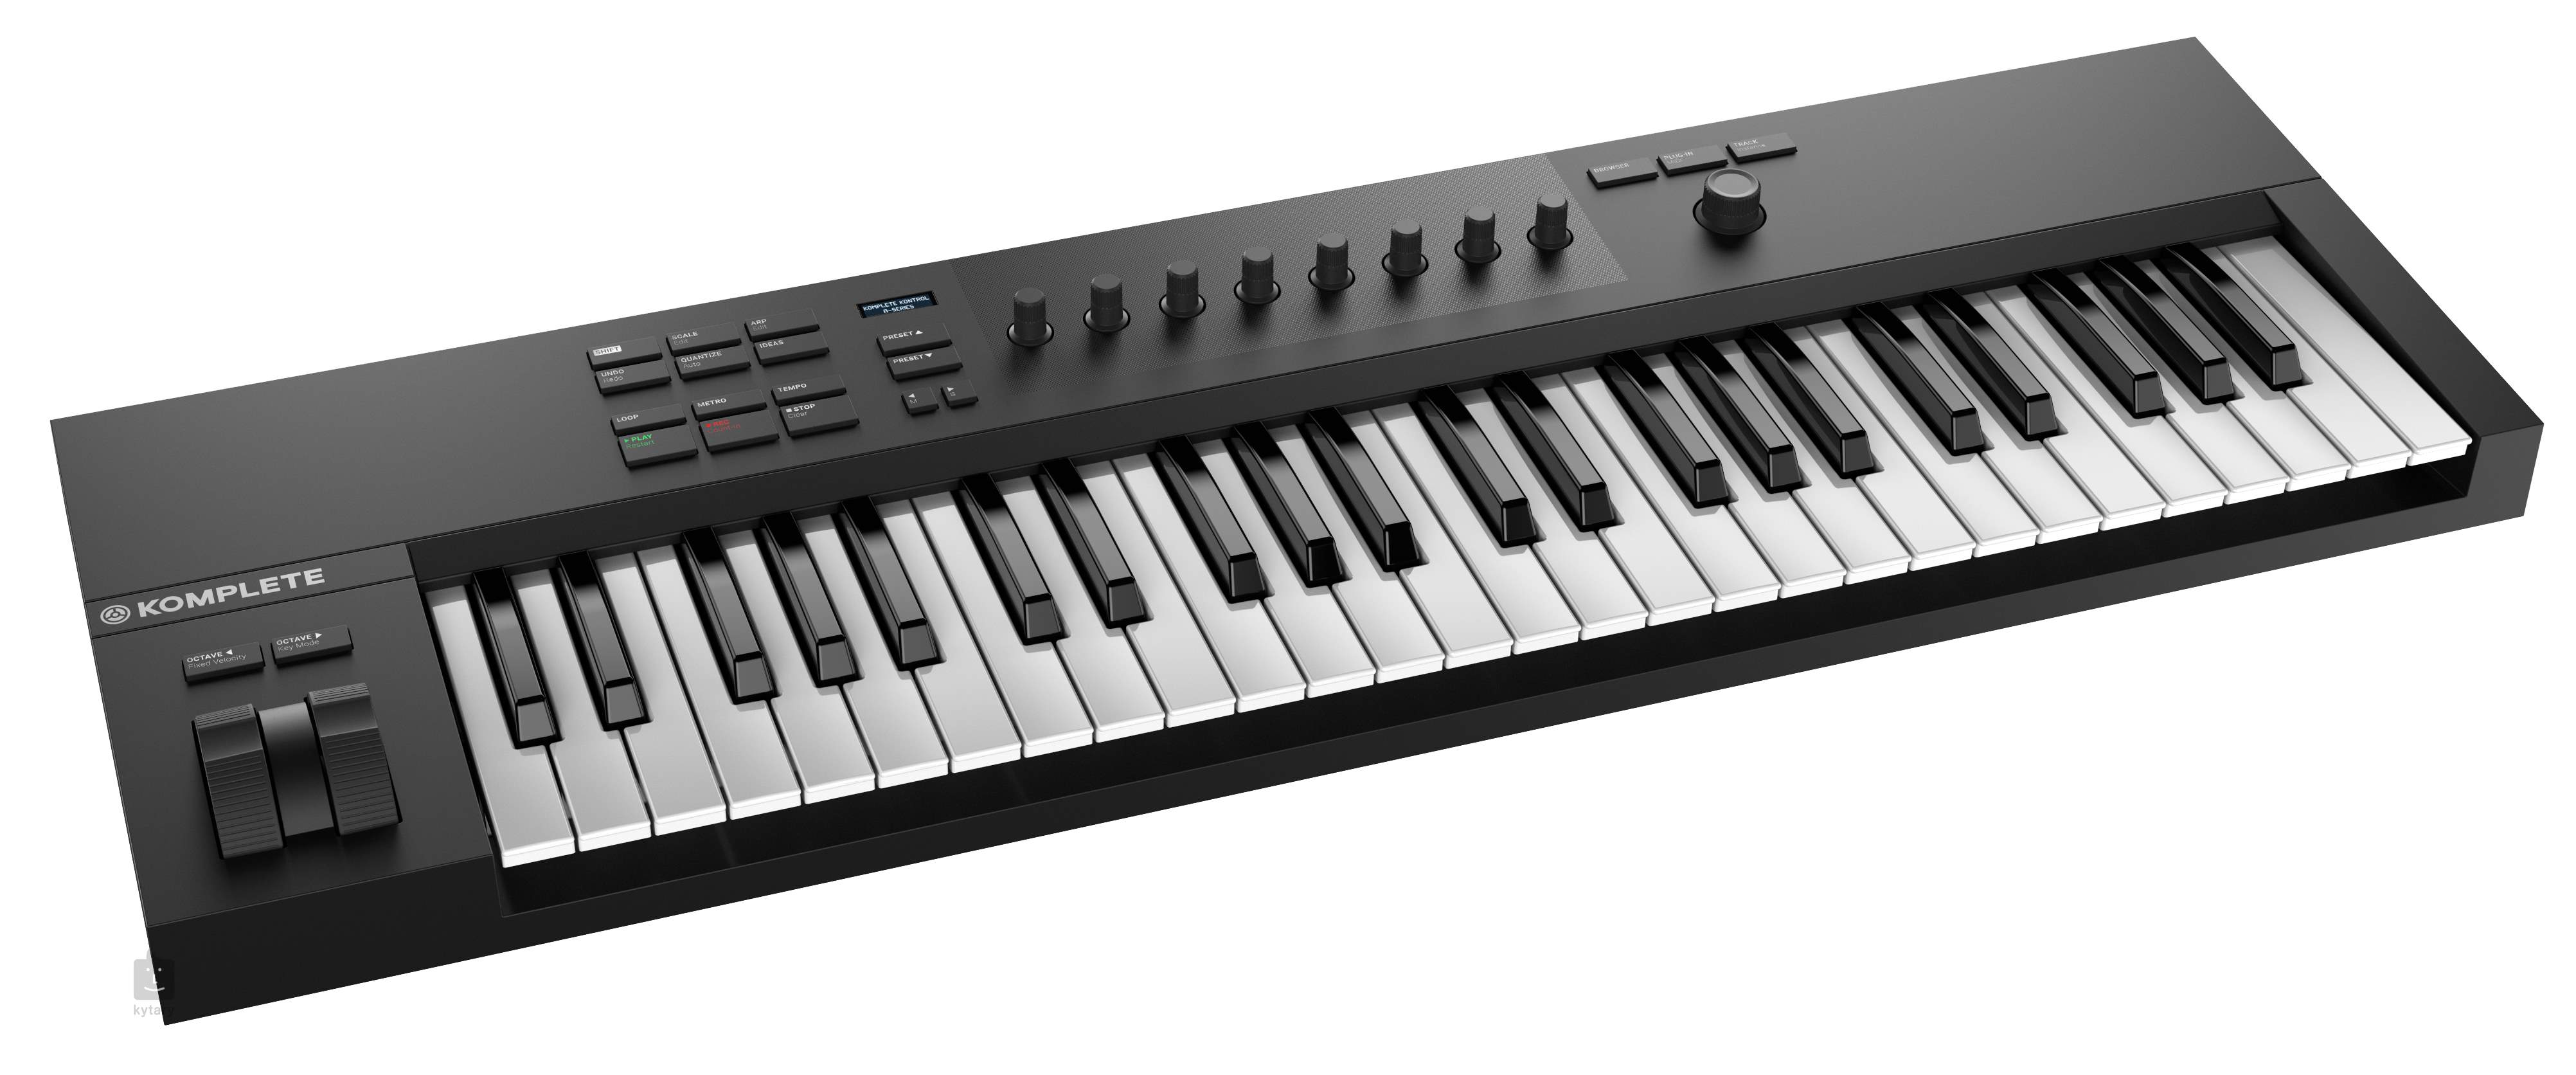 native instruments keyboard a49